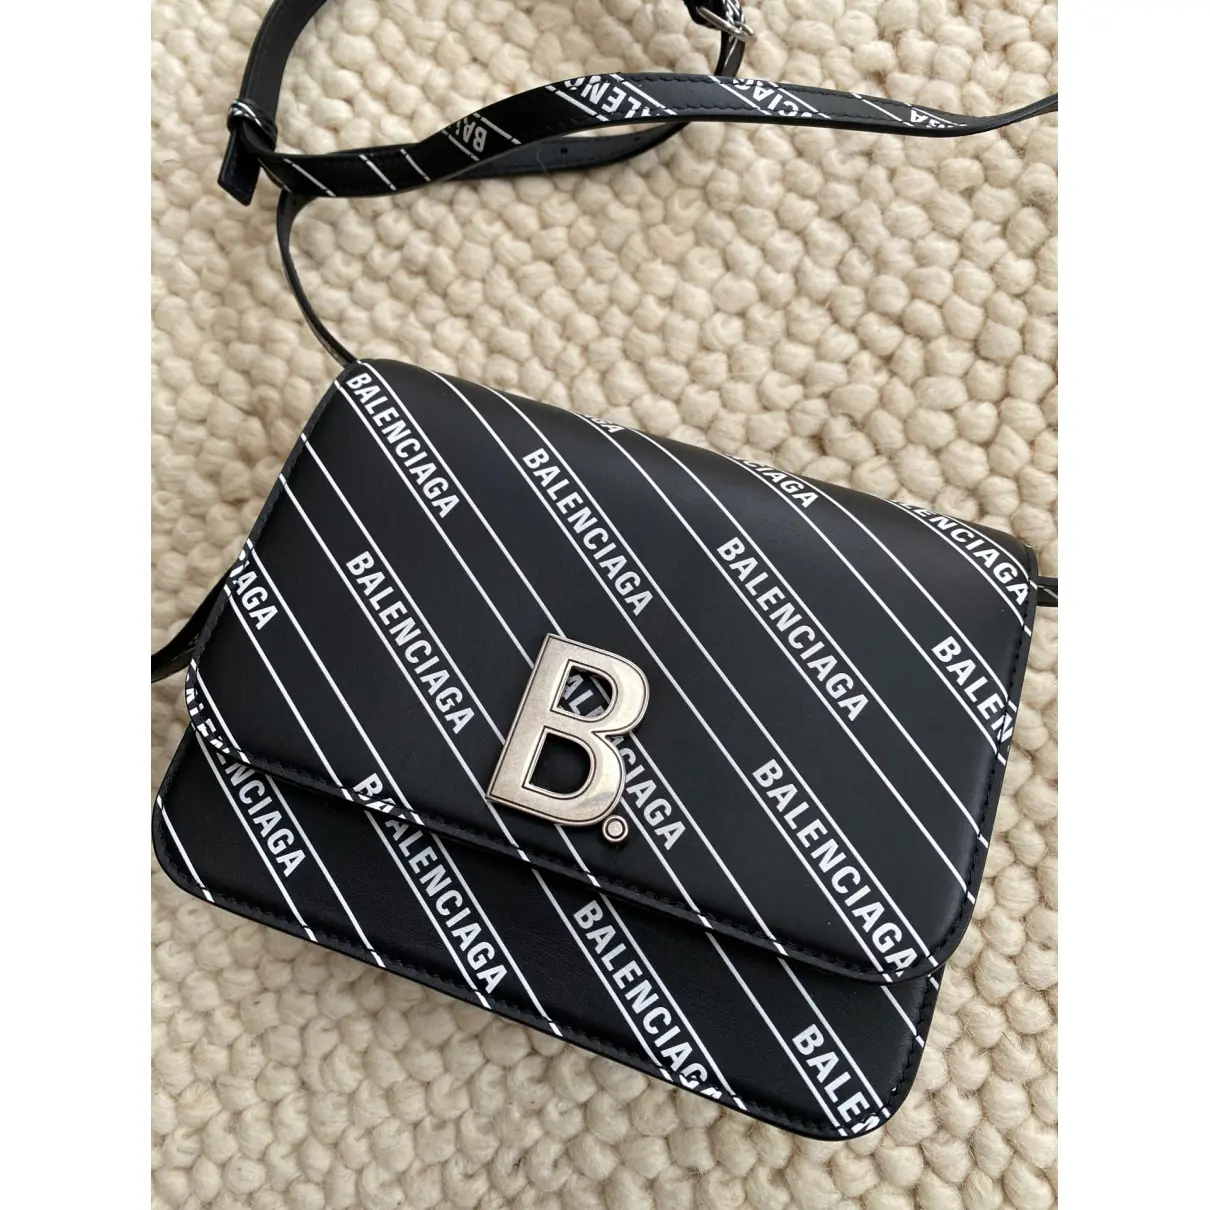 Buy Balenciaga B leather handbag online